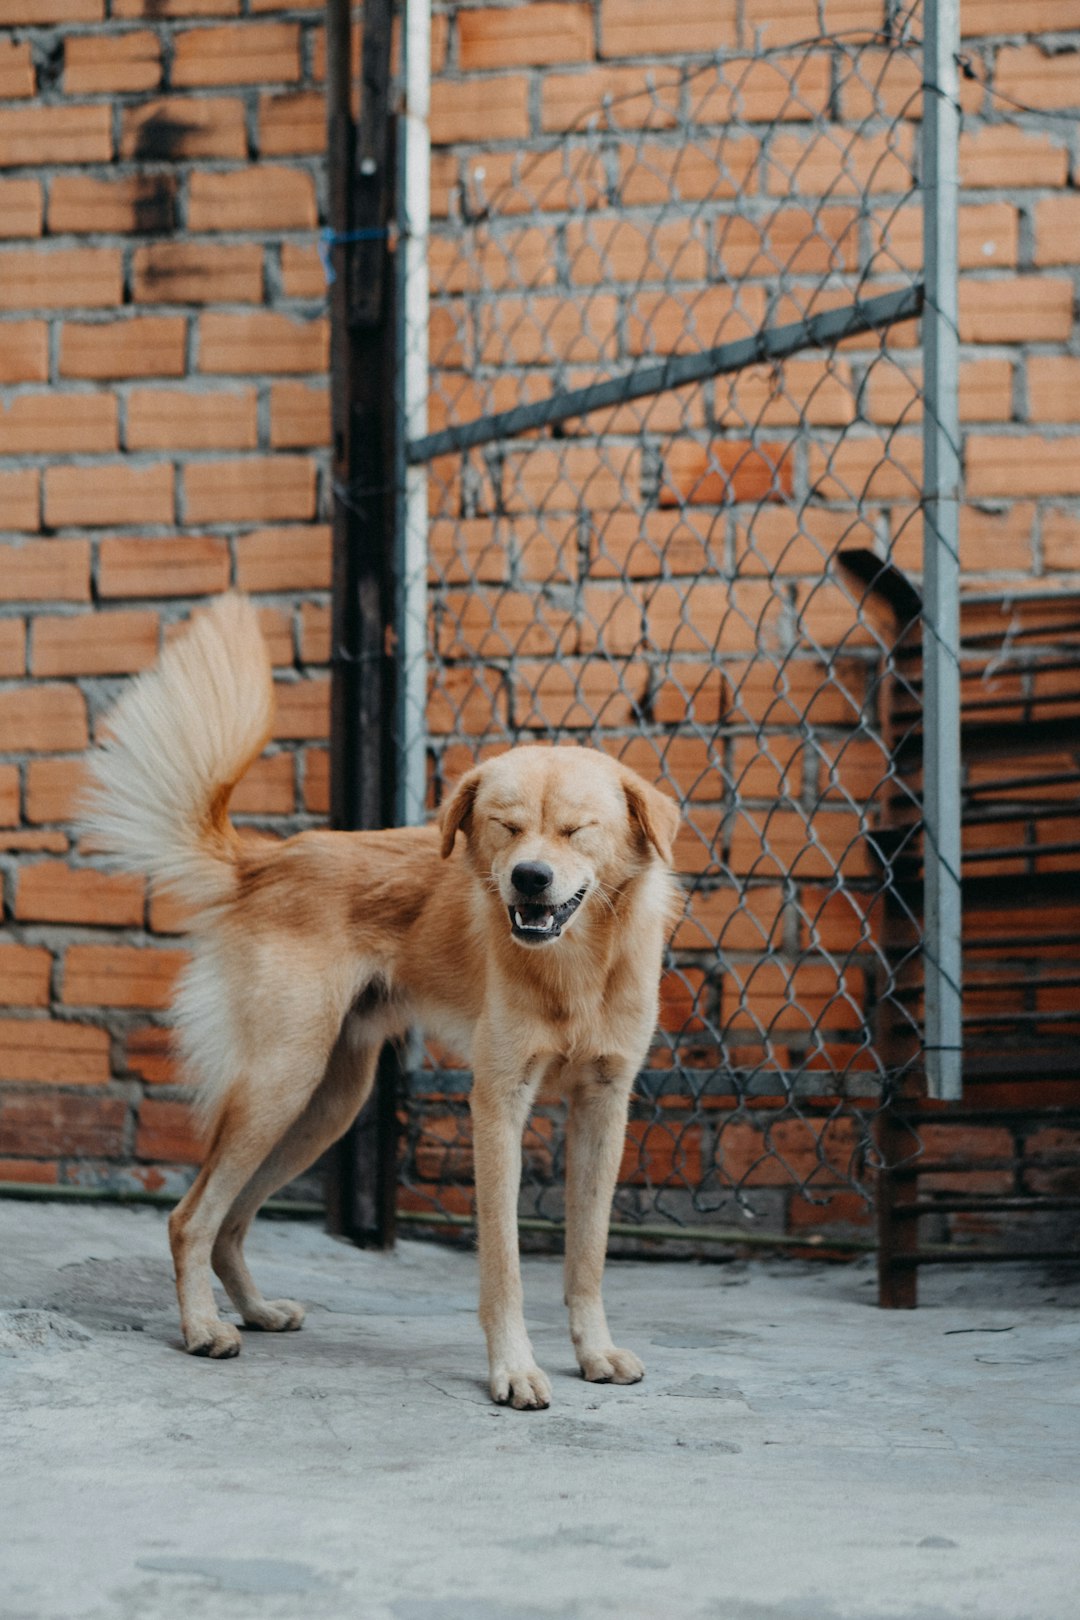 yellow labrador retriever puppy standing on brick floor during daytime